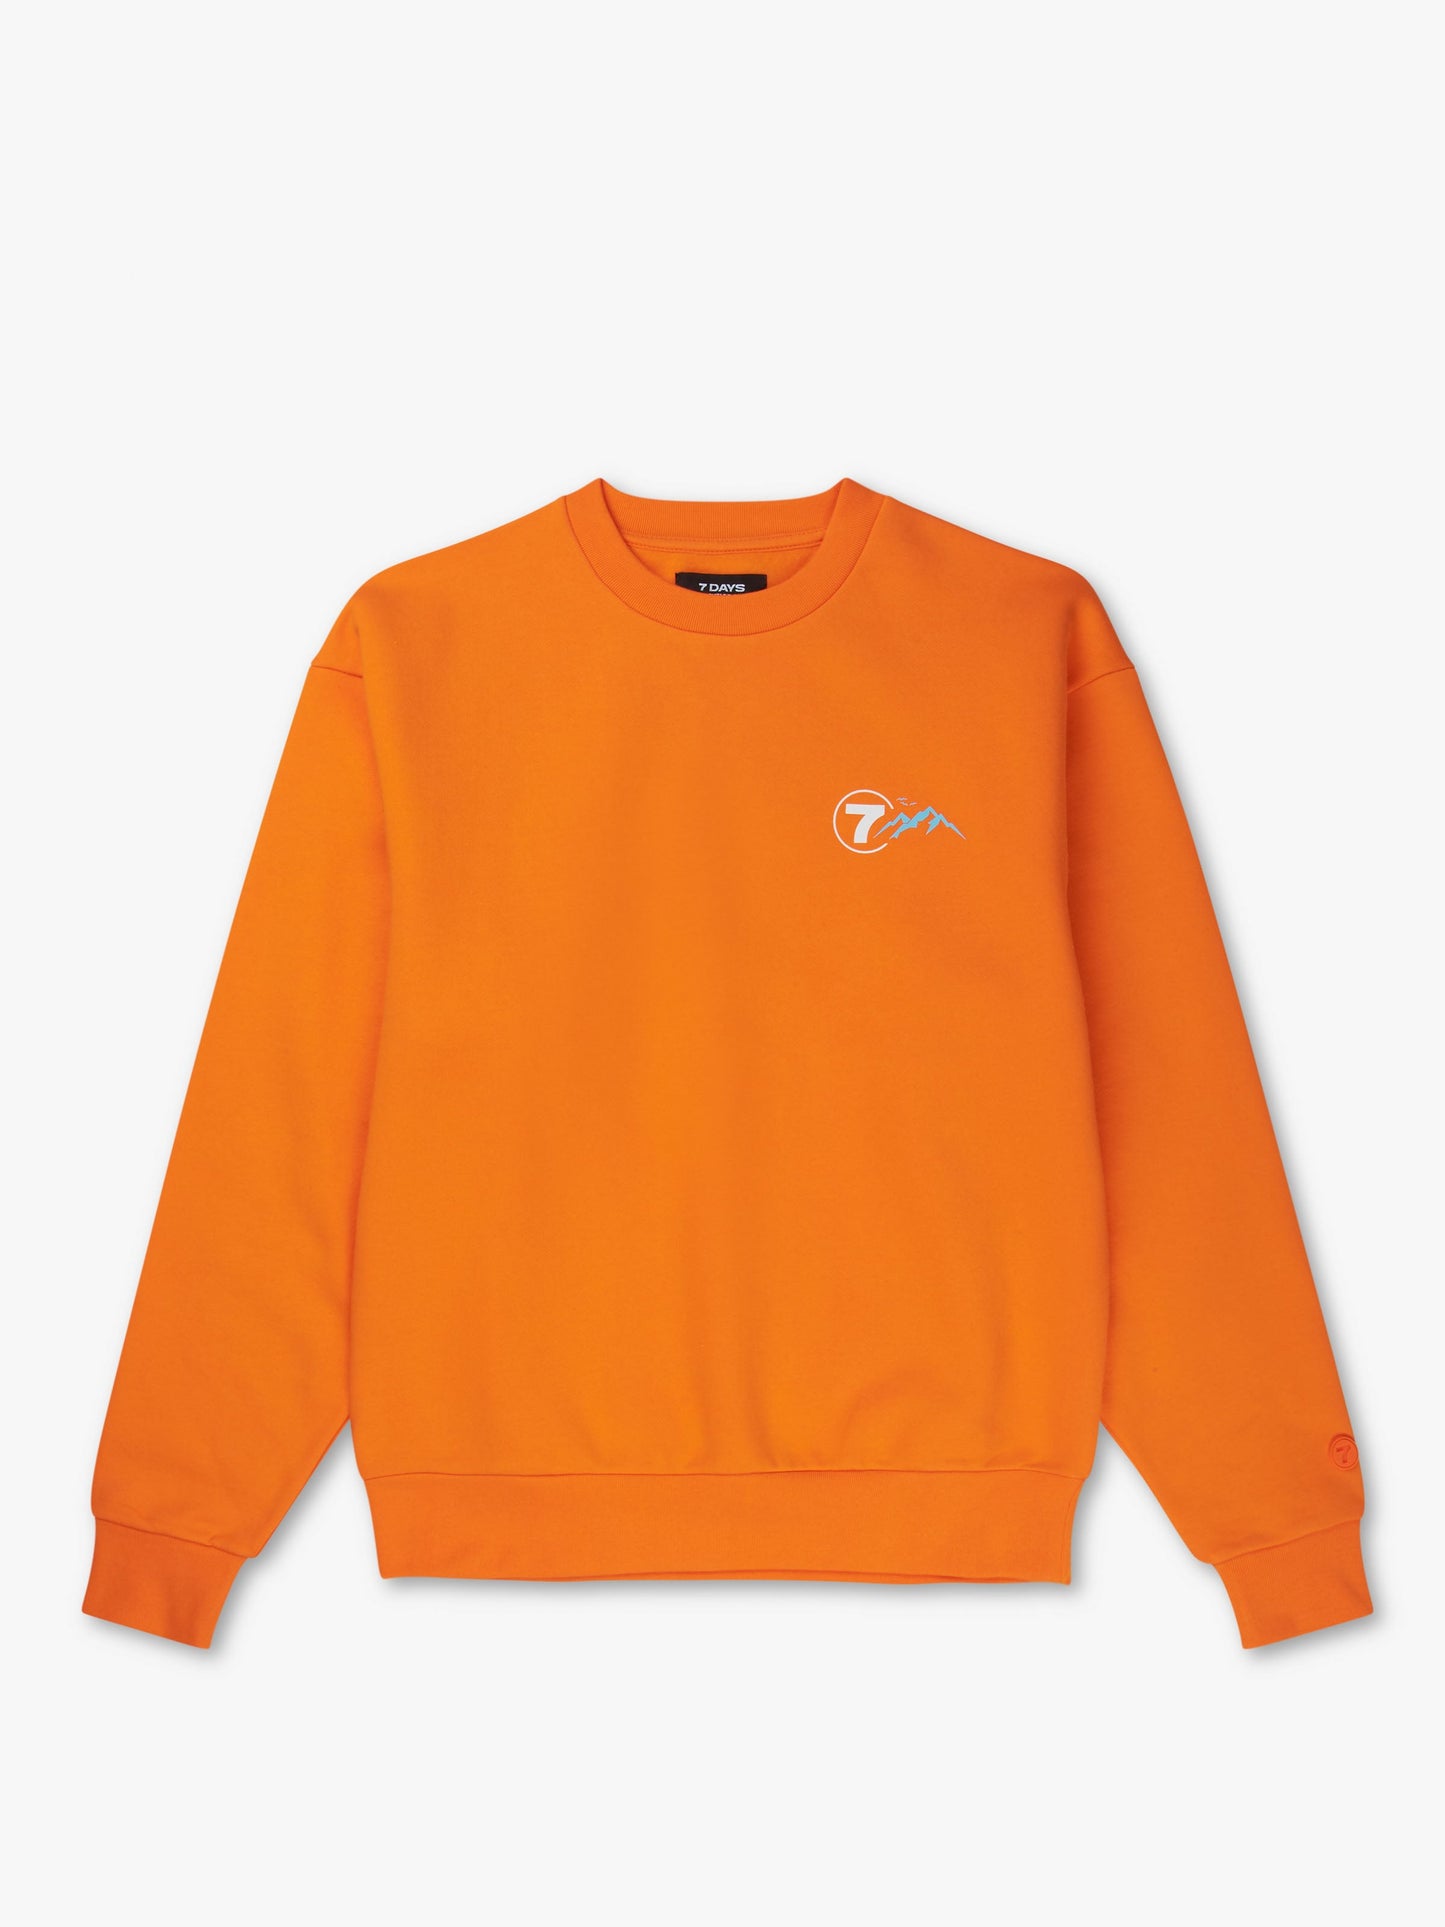 7 DAYS Organic Graphic Crew Neck Sweatshirts 617 Vibrant Orange